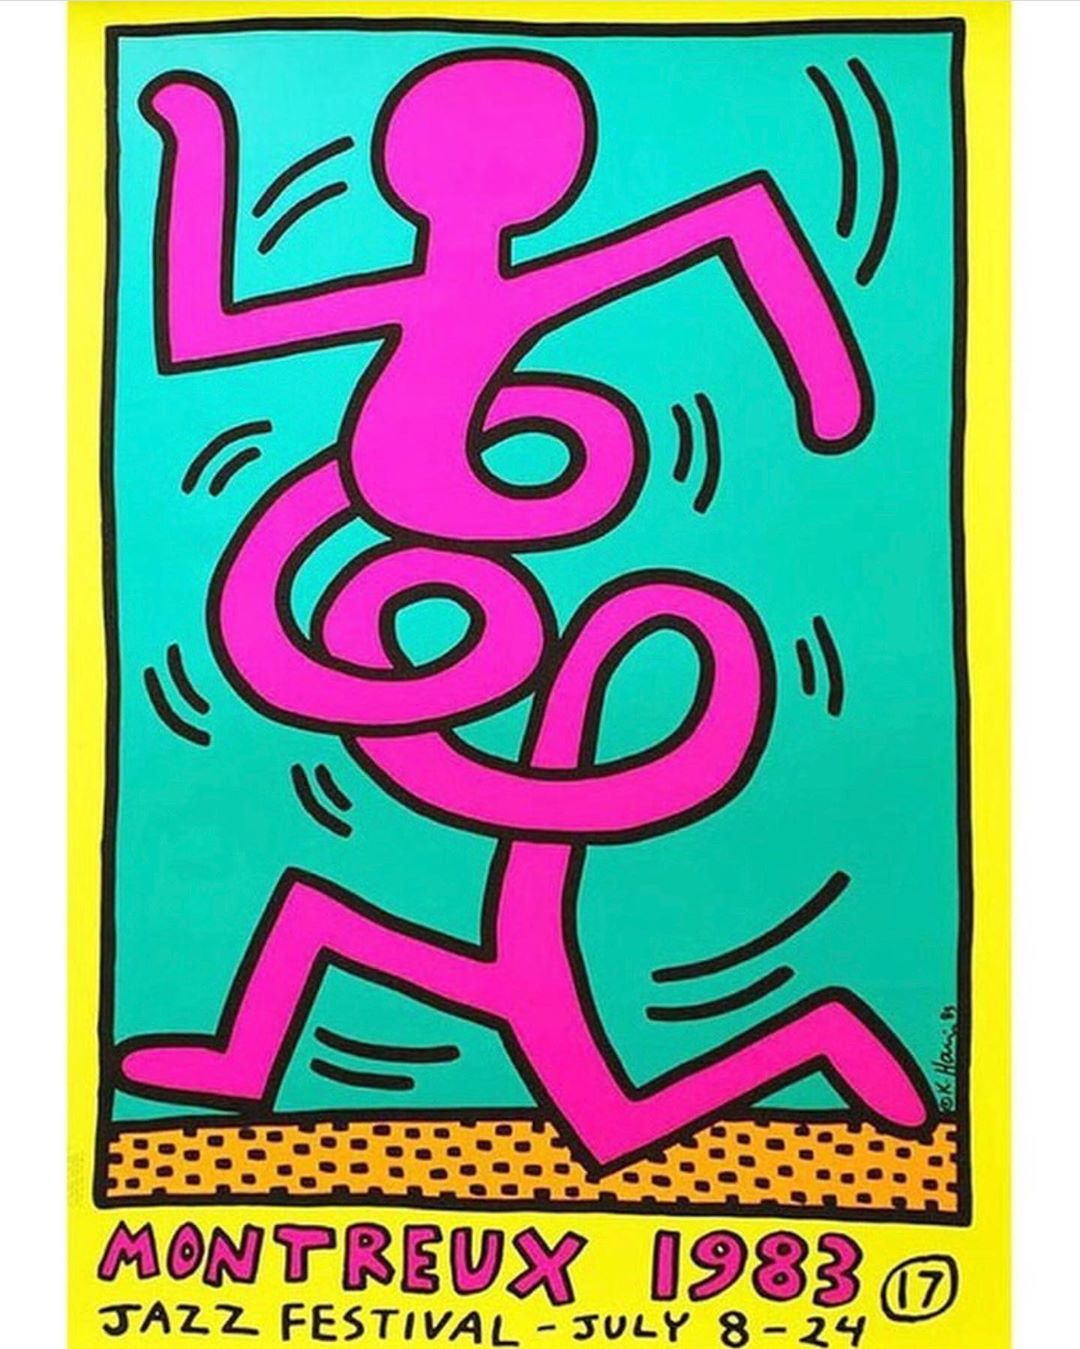 Keith Haring MOntreux 1983 ByeqjXrHRoZ